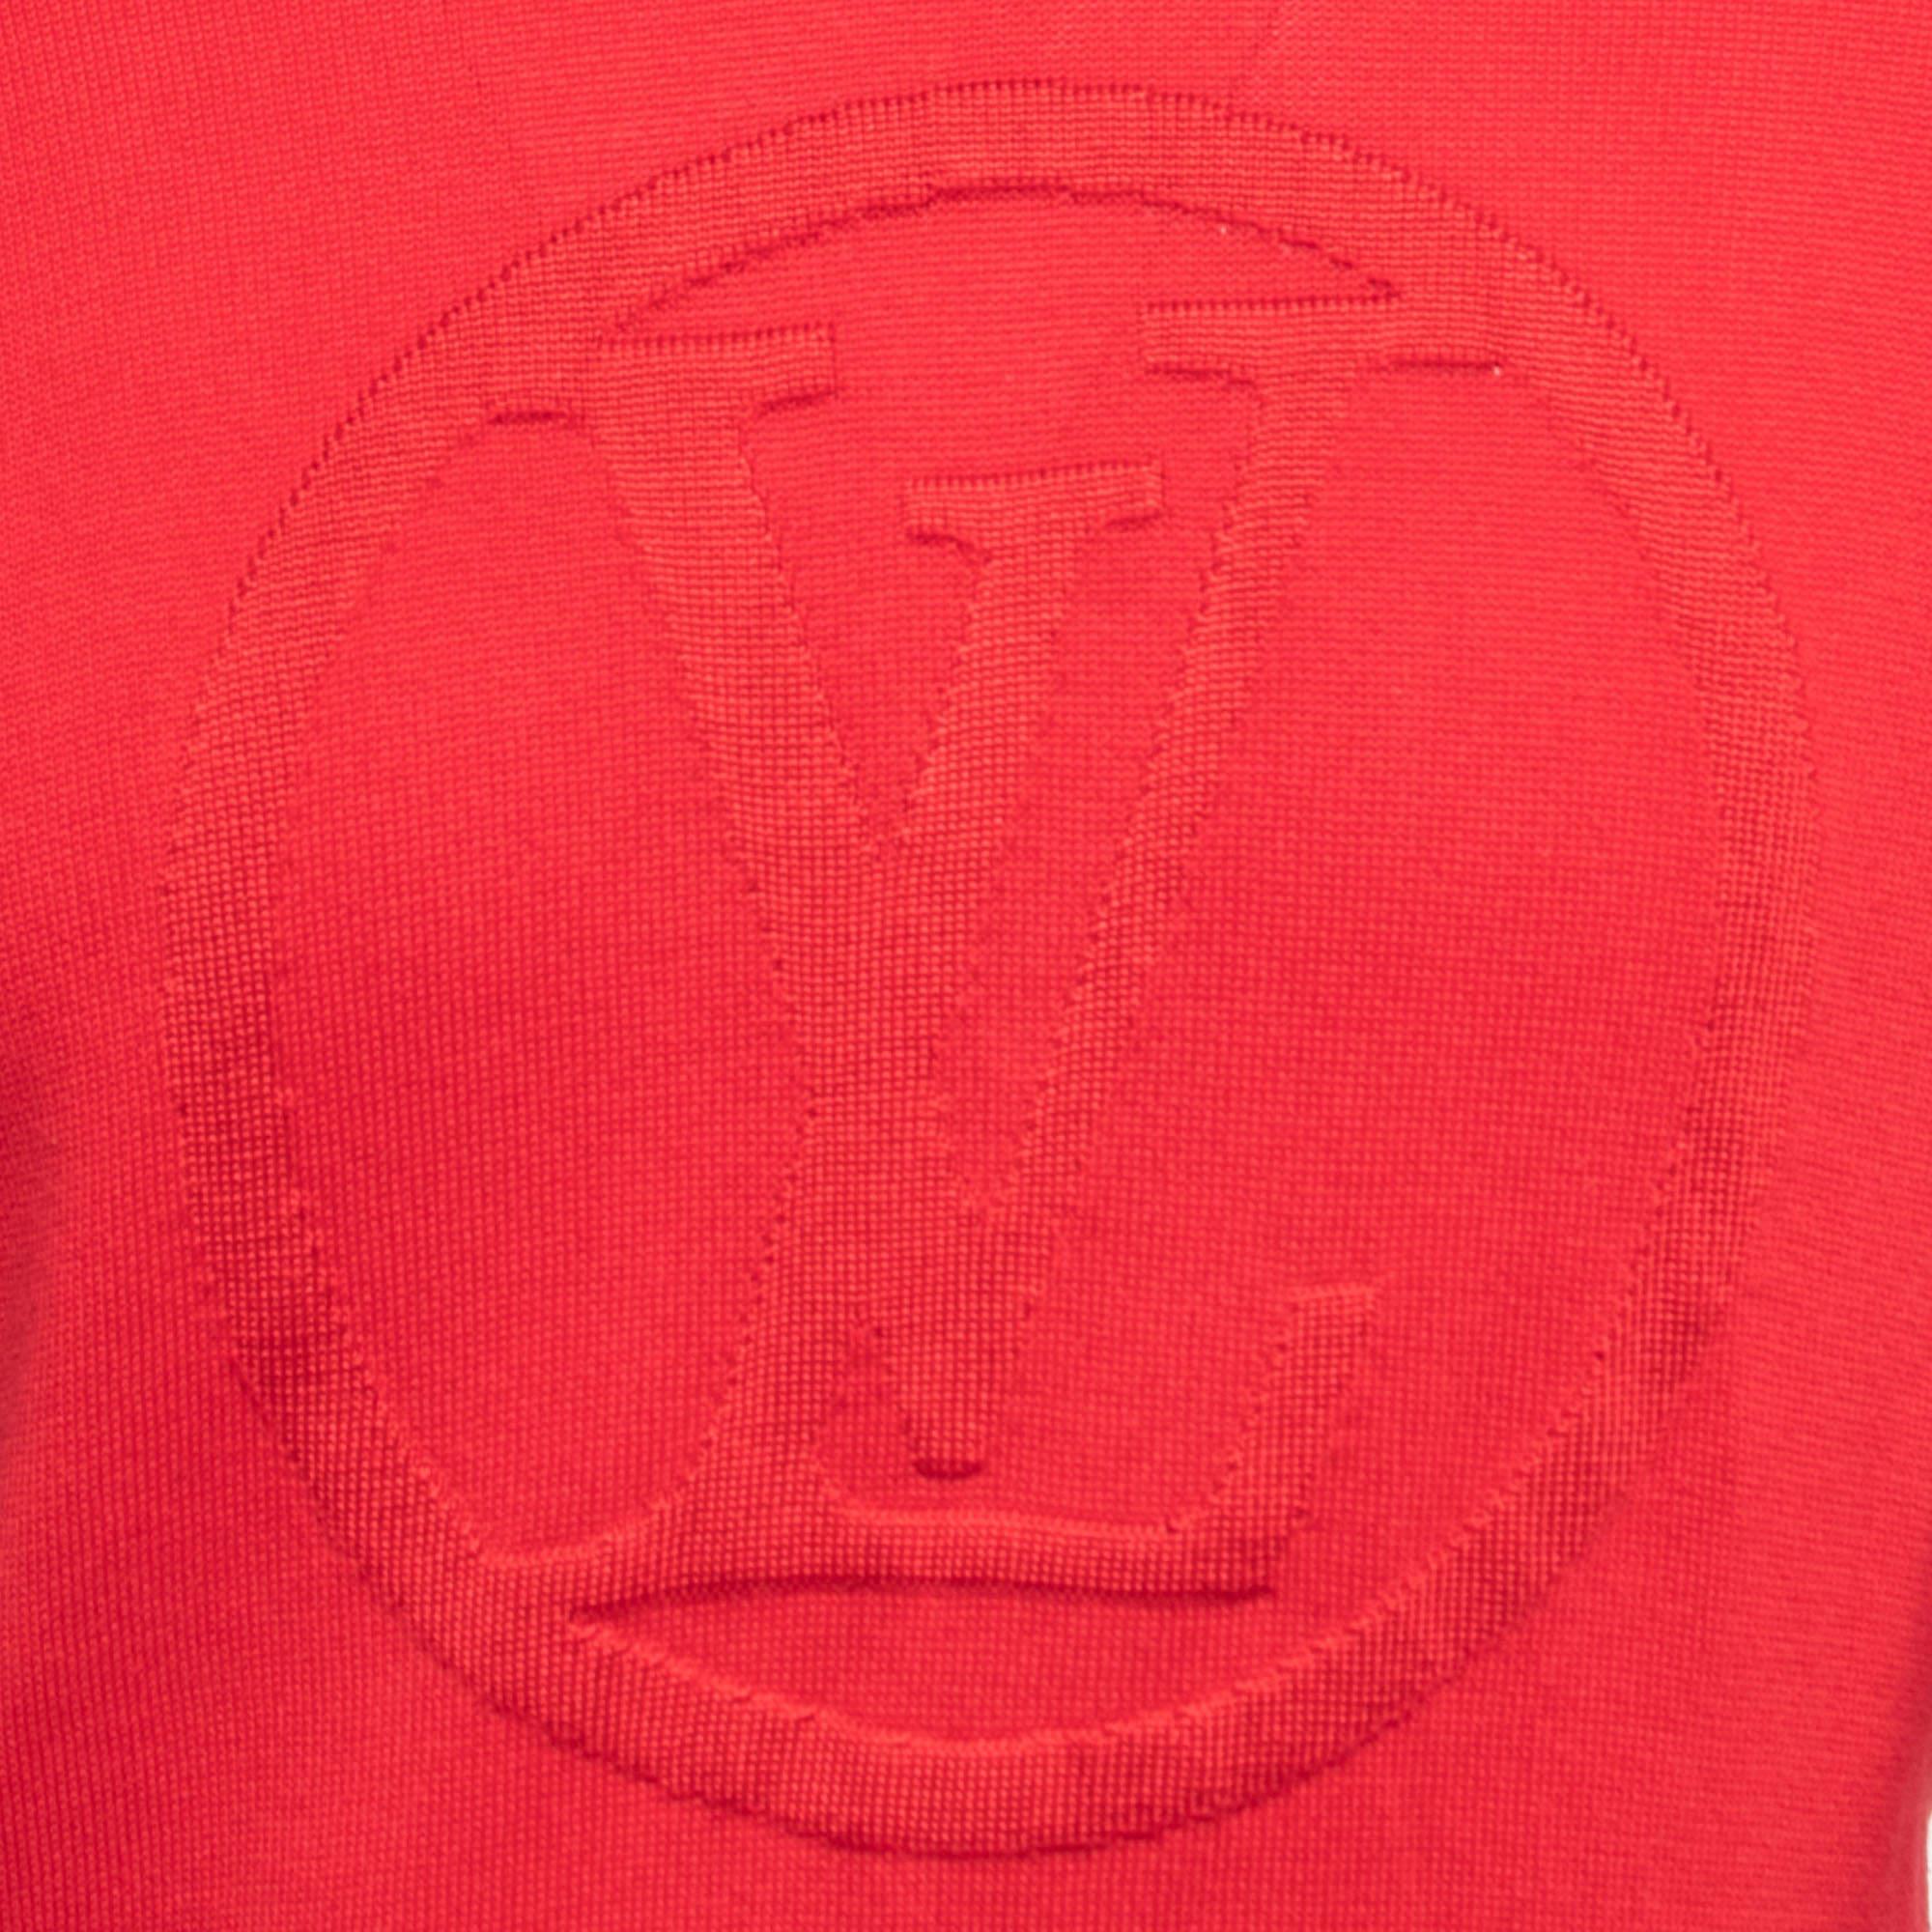 Men's Louis Vuitton Red LLouis Vuittoogo Patterned Cotton & Silk Knit Hooded Sweater M